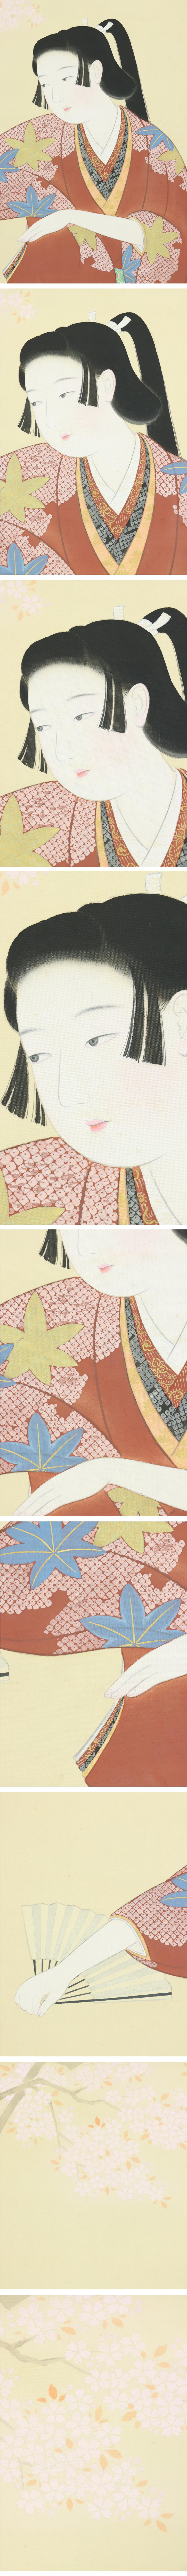 半価販売◆満江女◆花の舞◆美人画◆日本画◆肉筆◆絹本◆掛軸◆m636 人物、菩薩